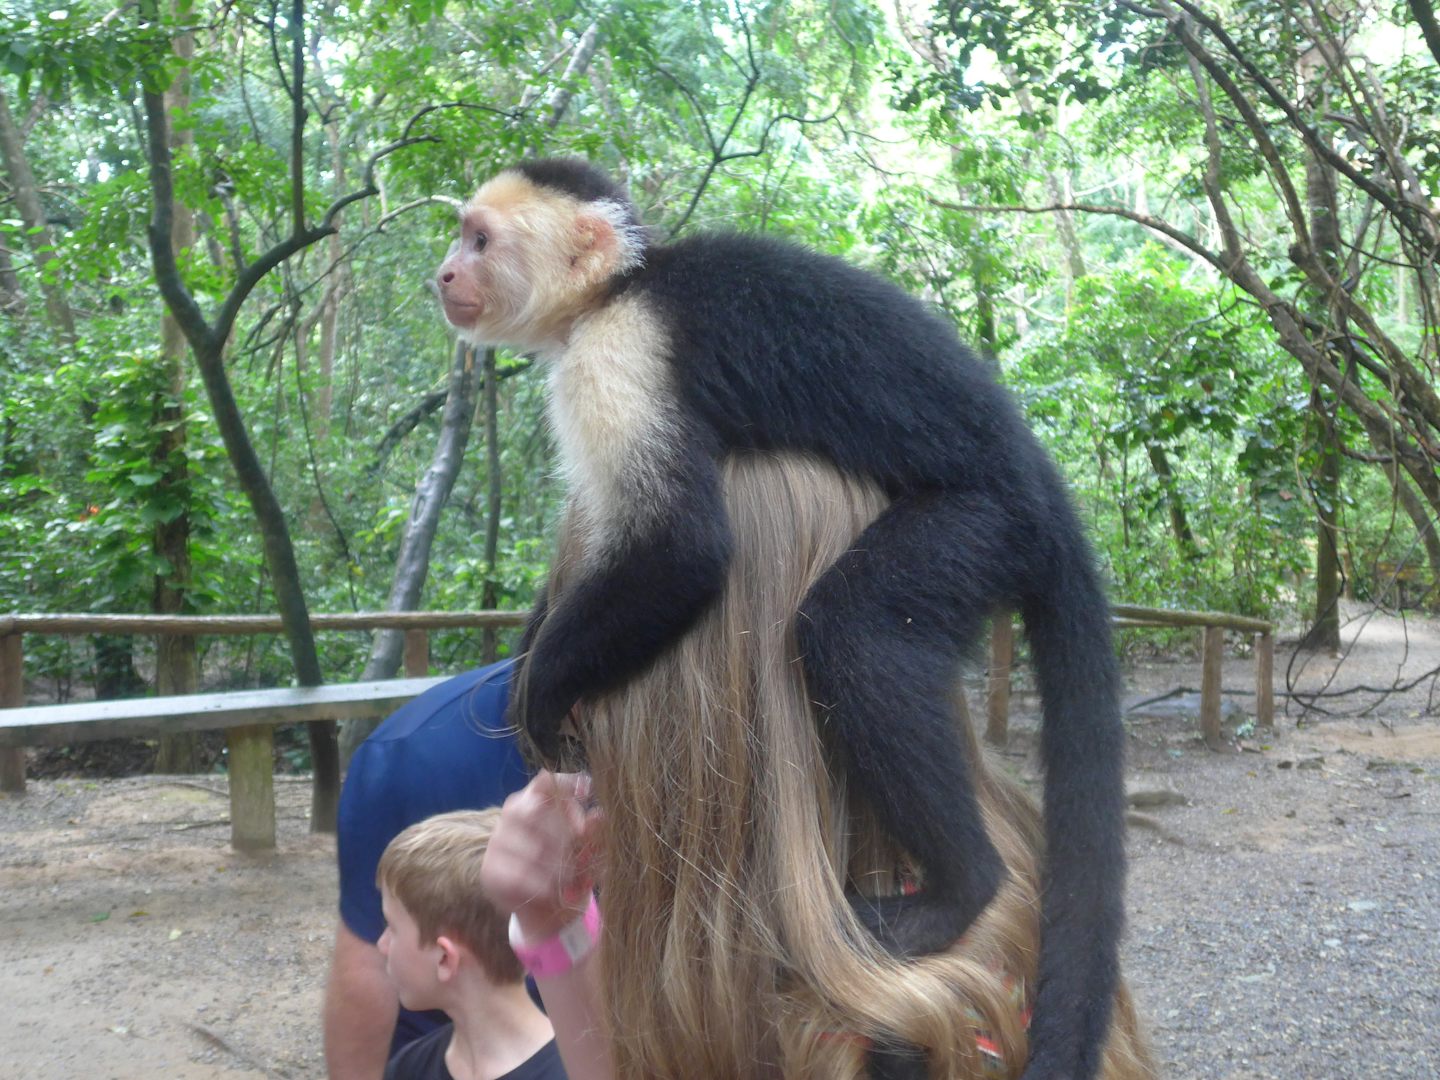 A monkey at the wildlife park